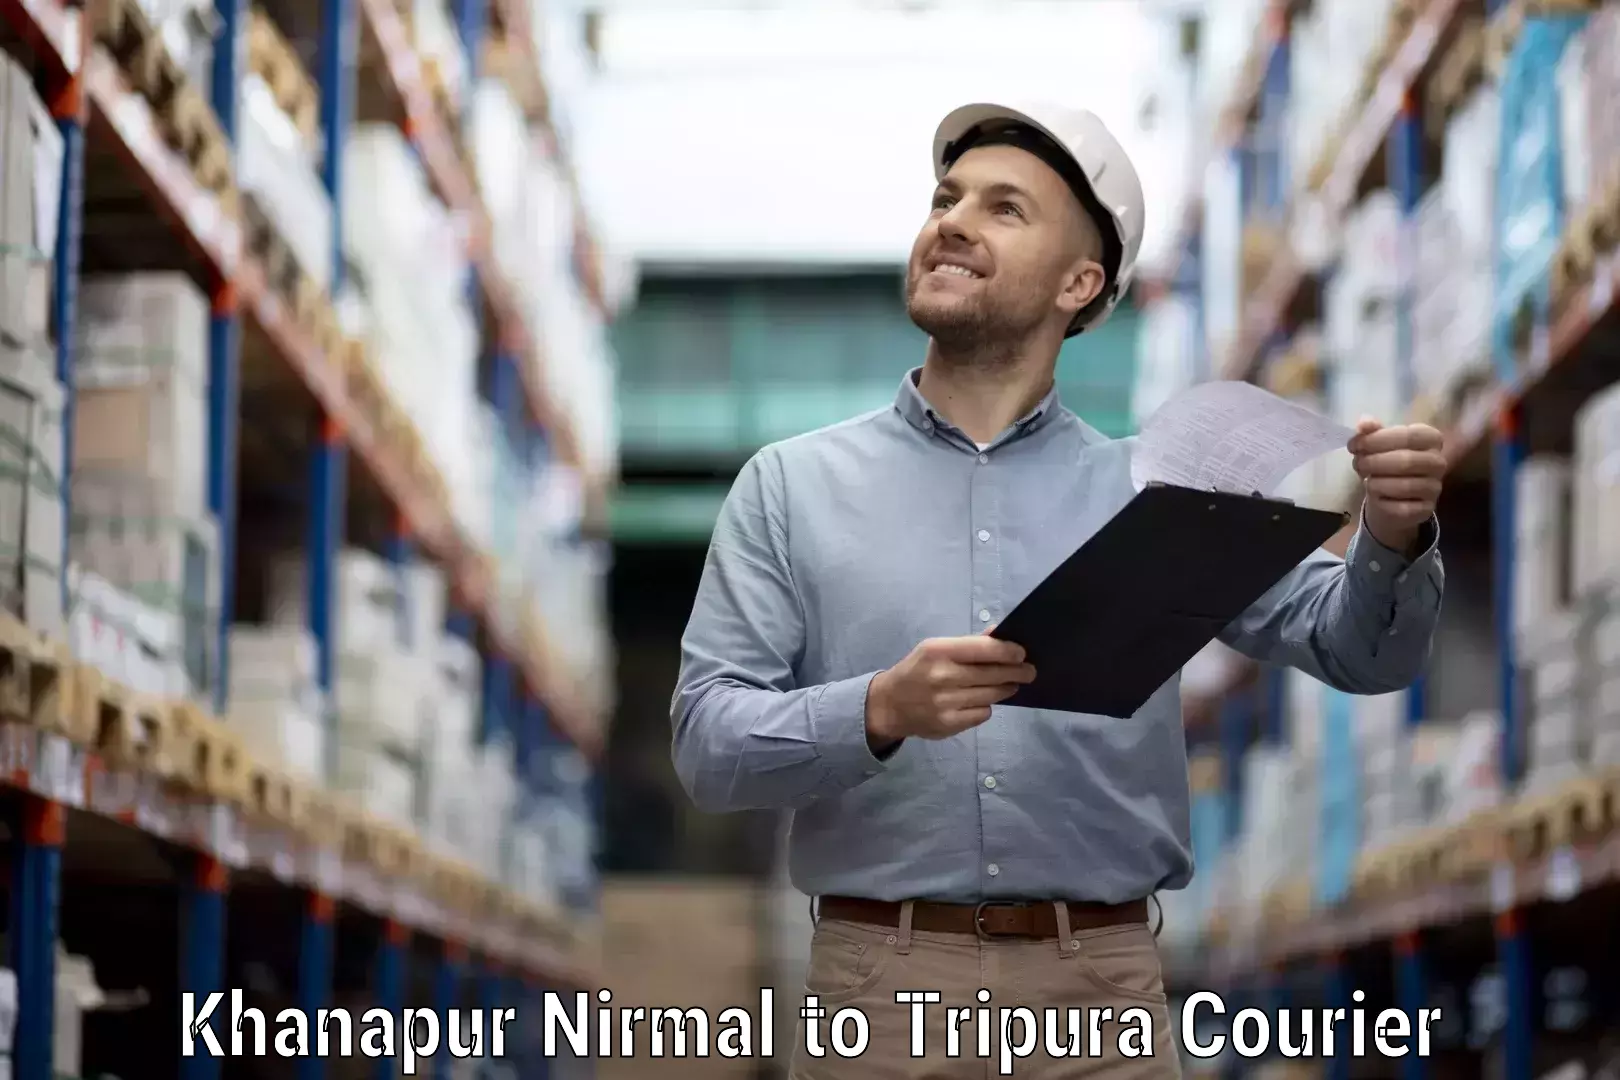 Express delivery solutions Khanapur Nirmal to Udaipur Tripura